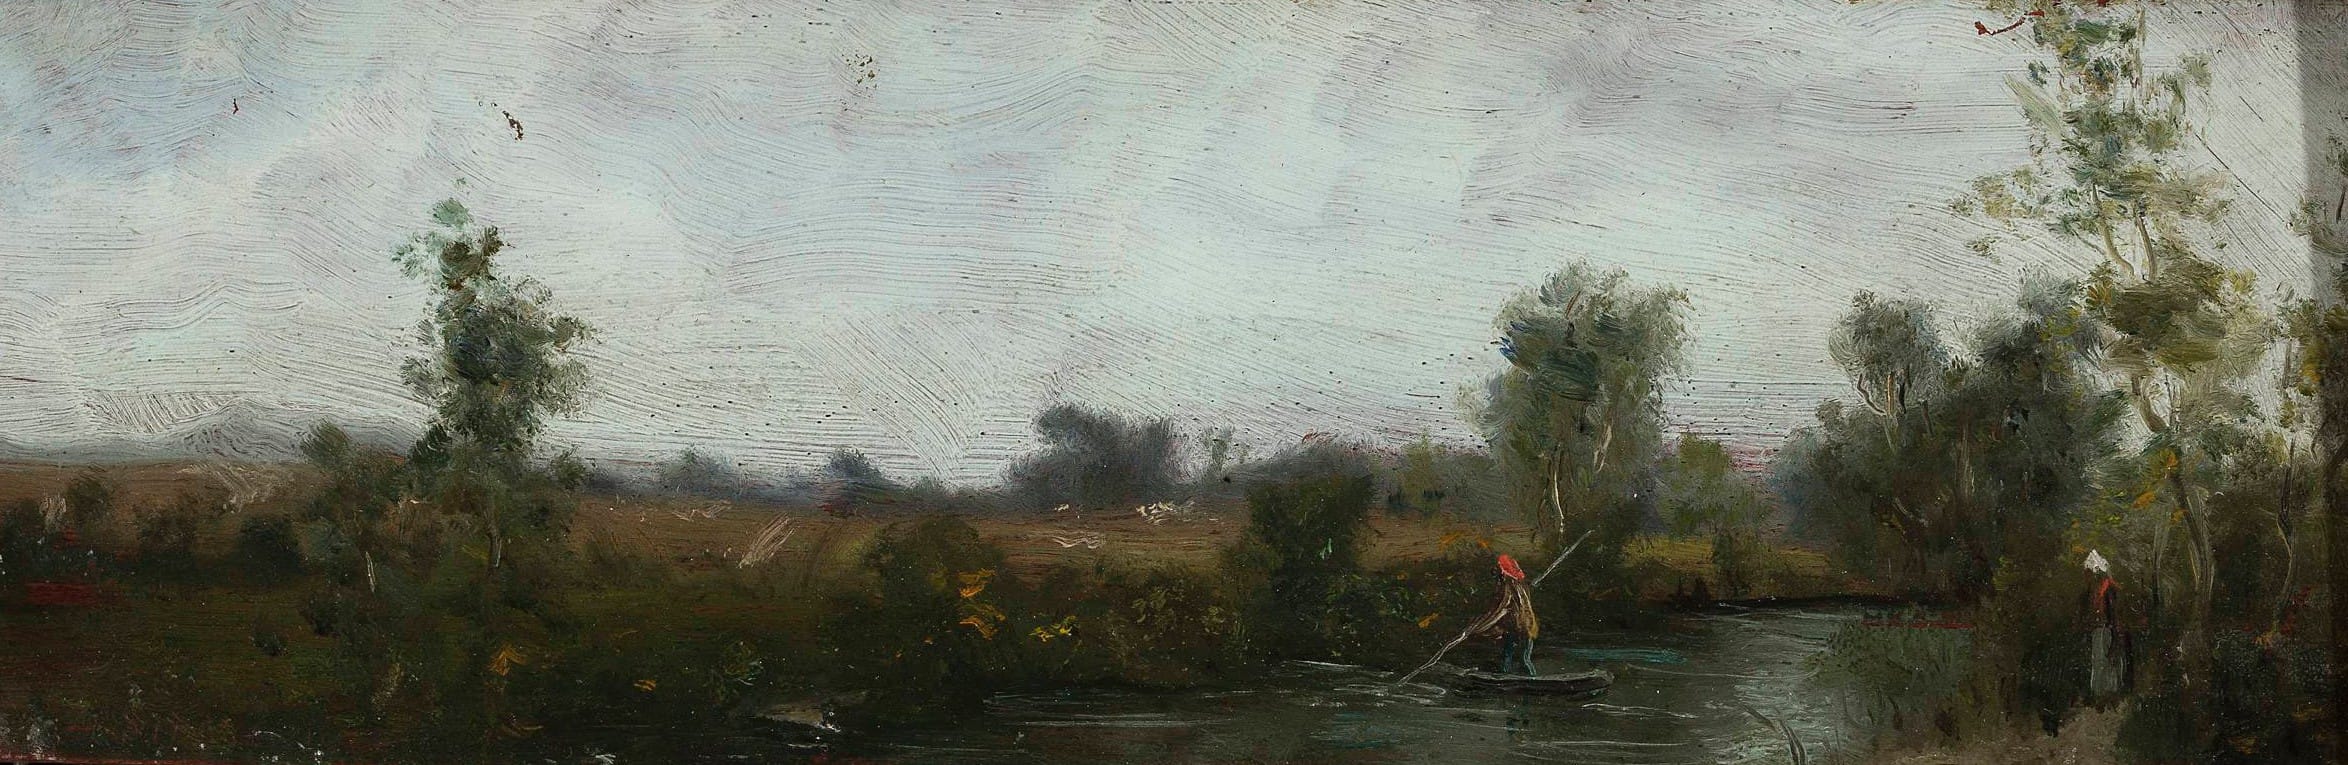 Zygmunt Sidorowicz - River landscape